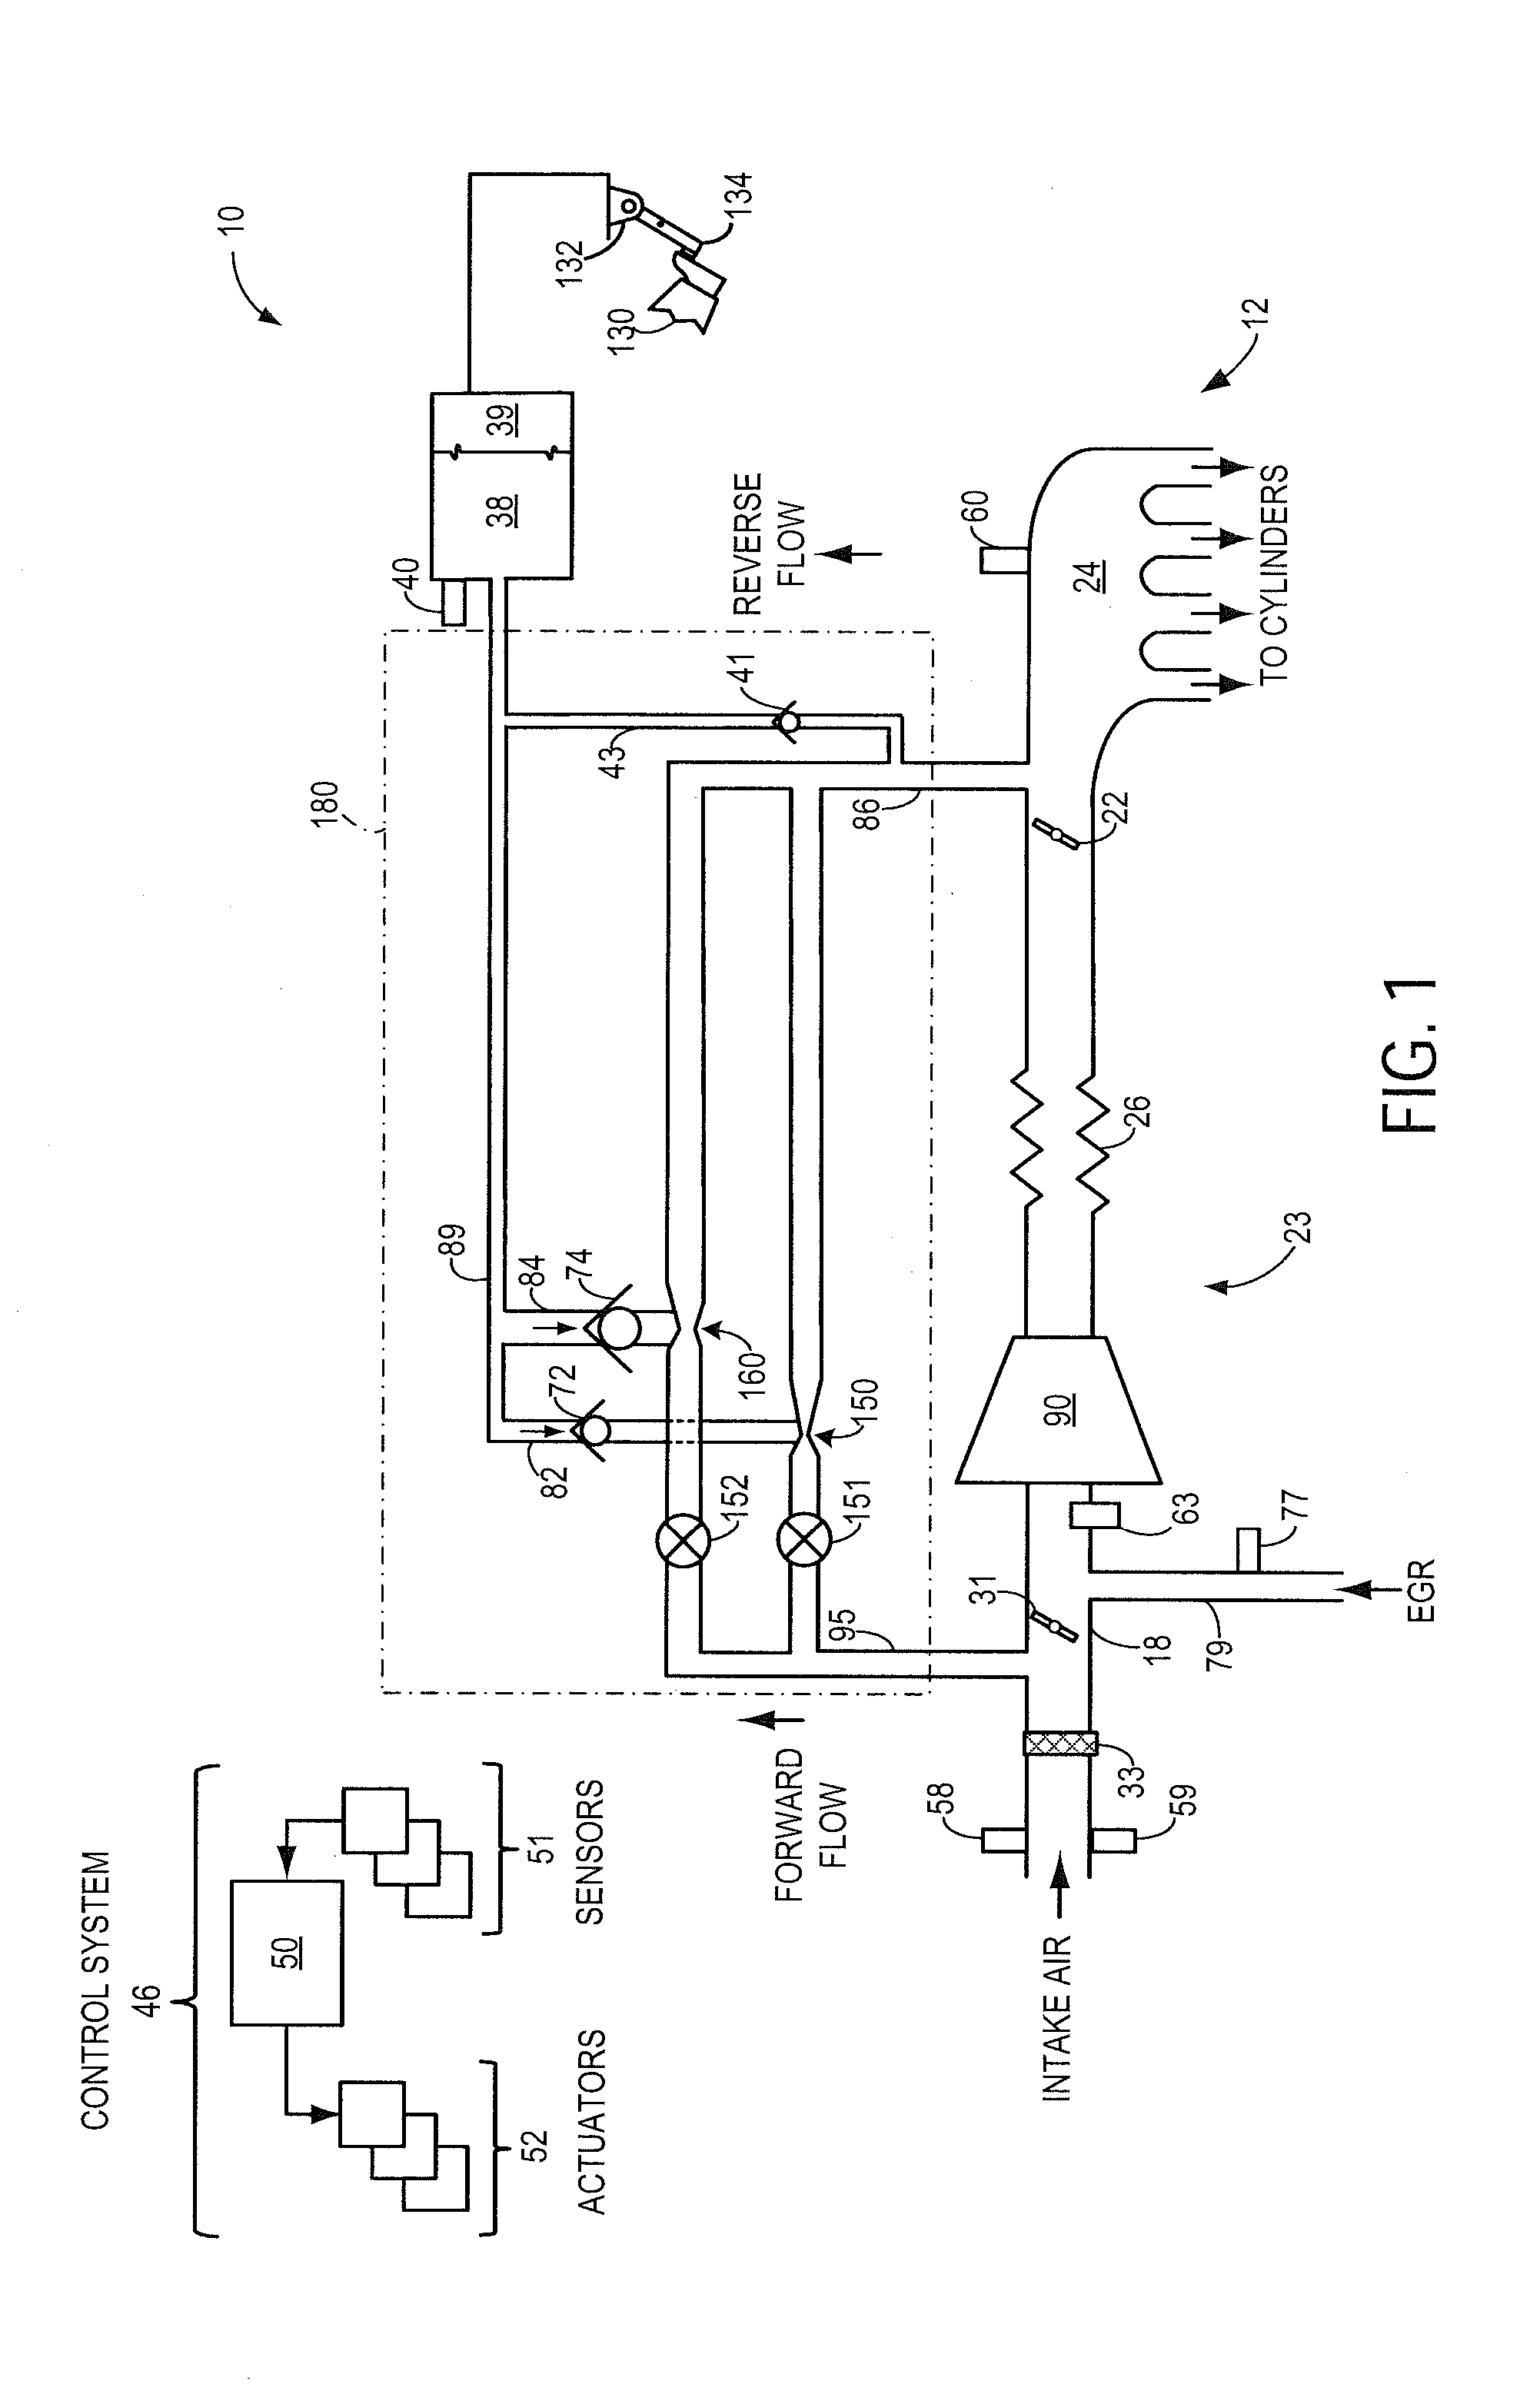 Parallel aspirator arrangement for vacuum generation and compressor bypass